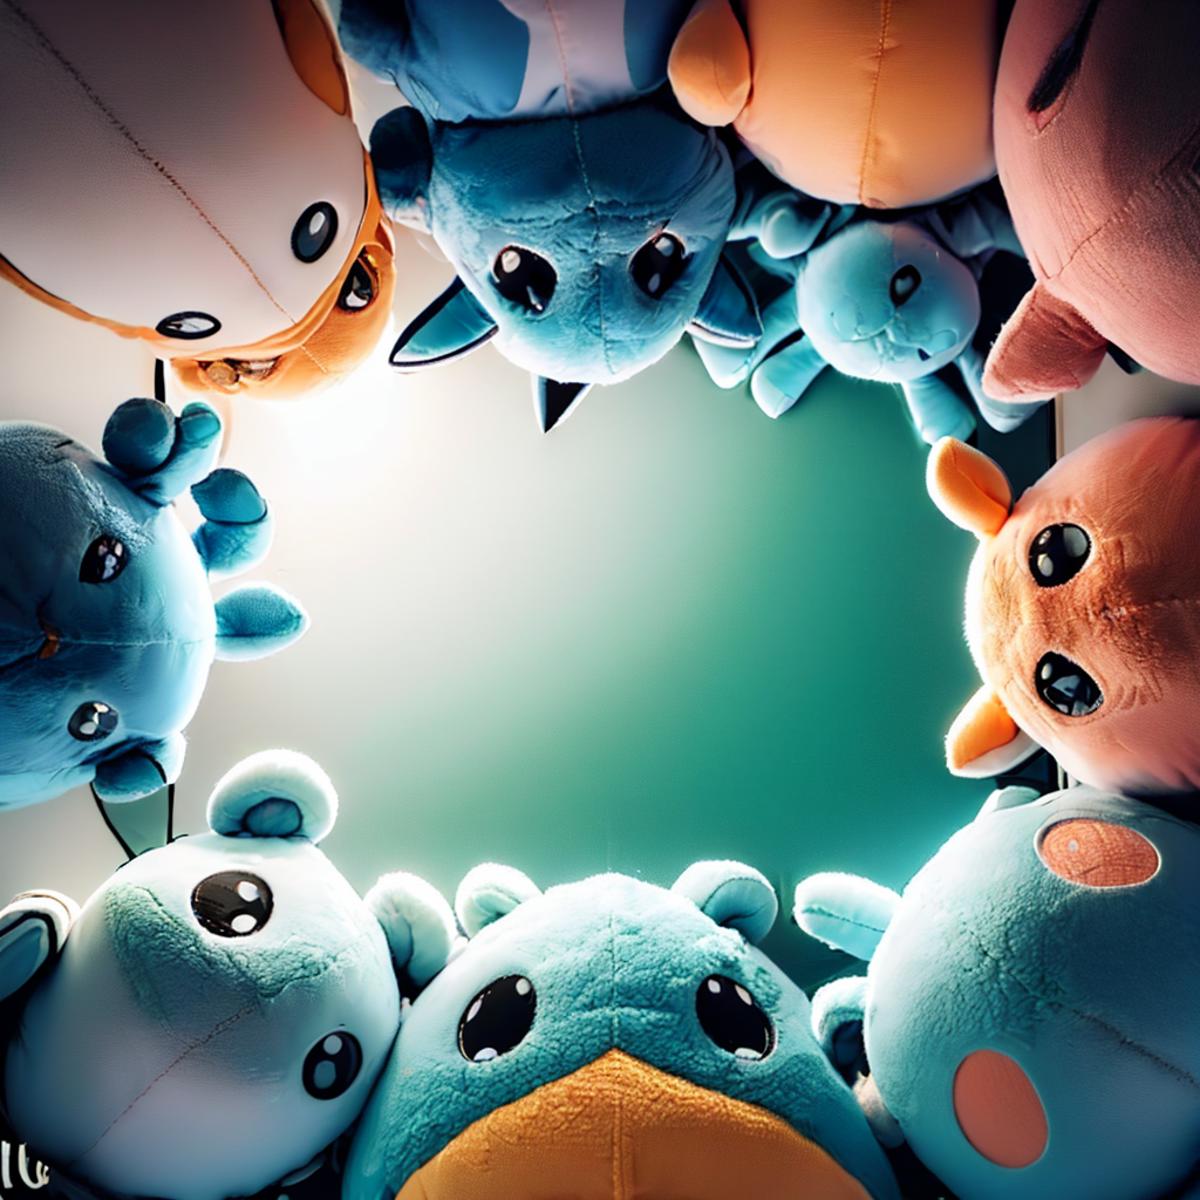 Spheal (Pokémon) image by justTNP